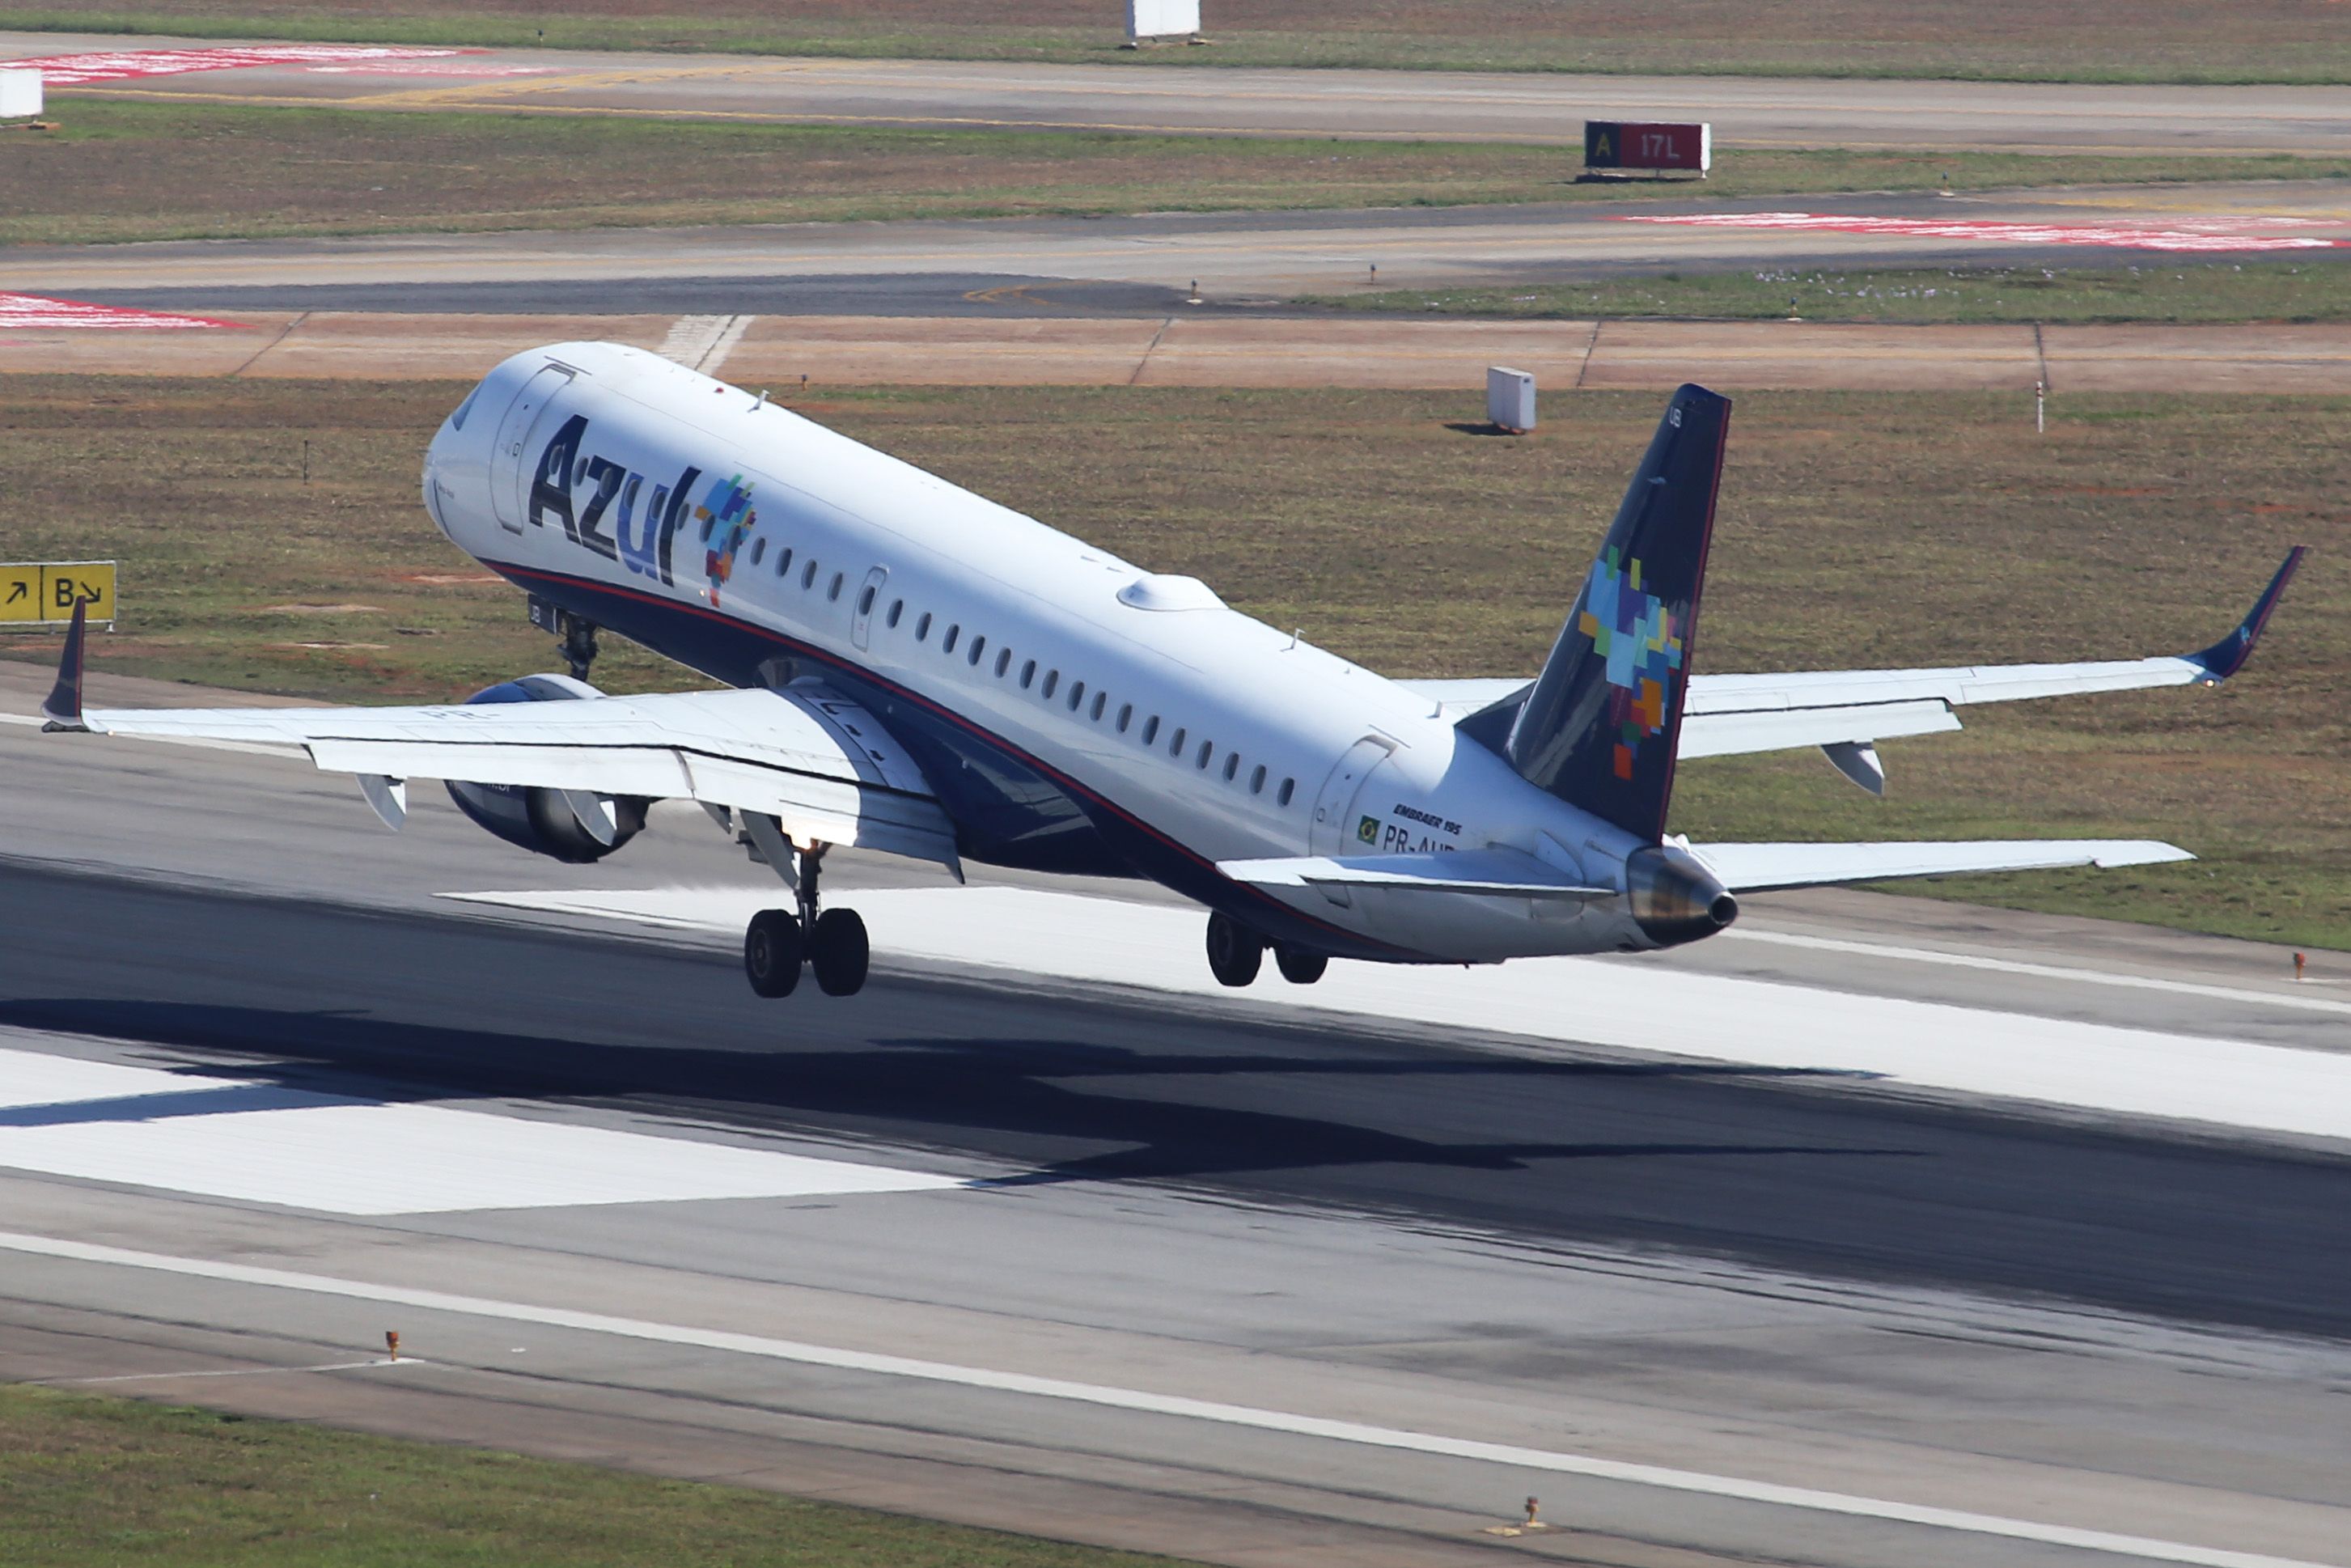 An Azul Embraer E195-E1 aircraft departing from Congonhas